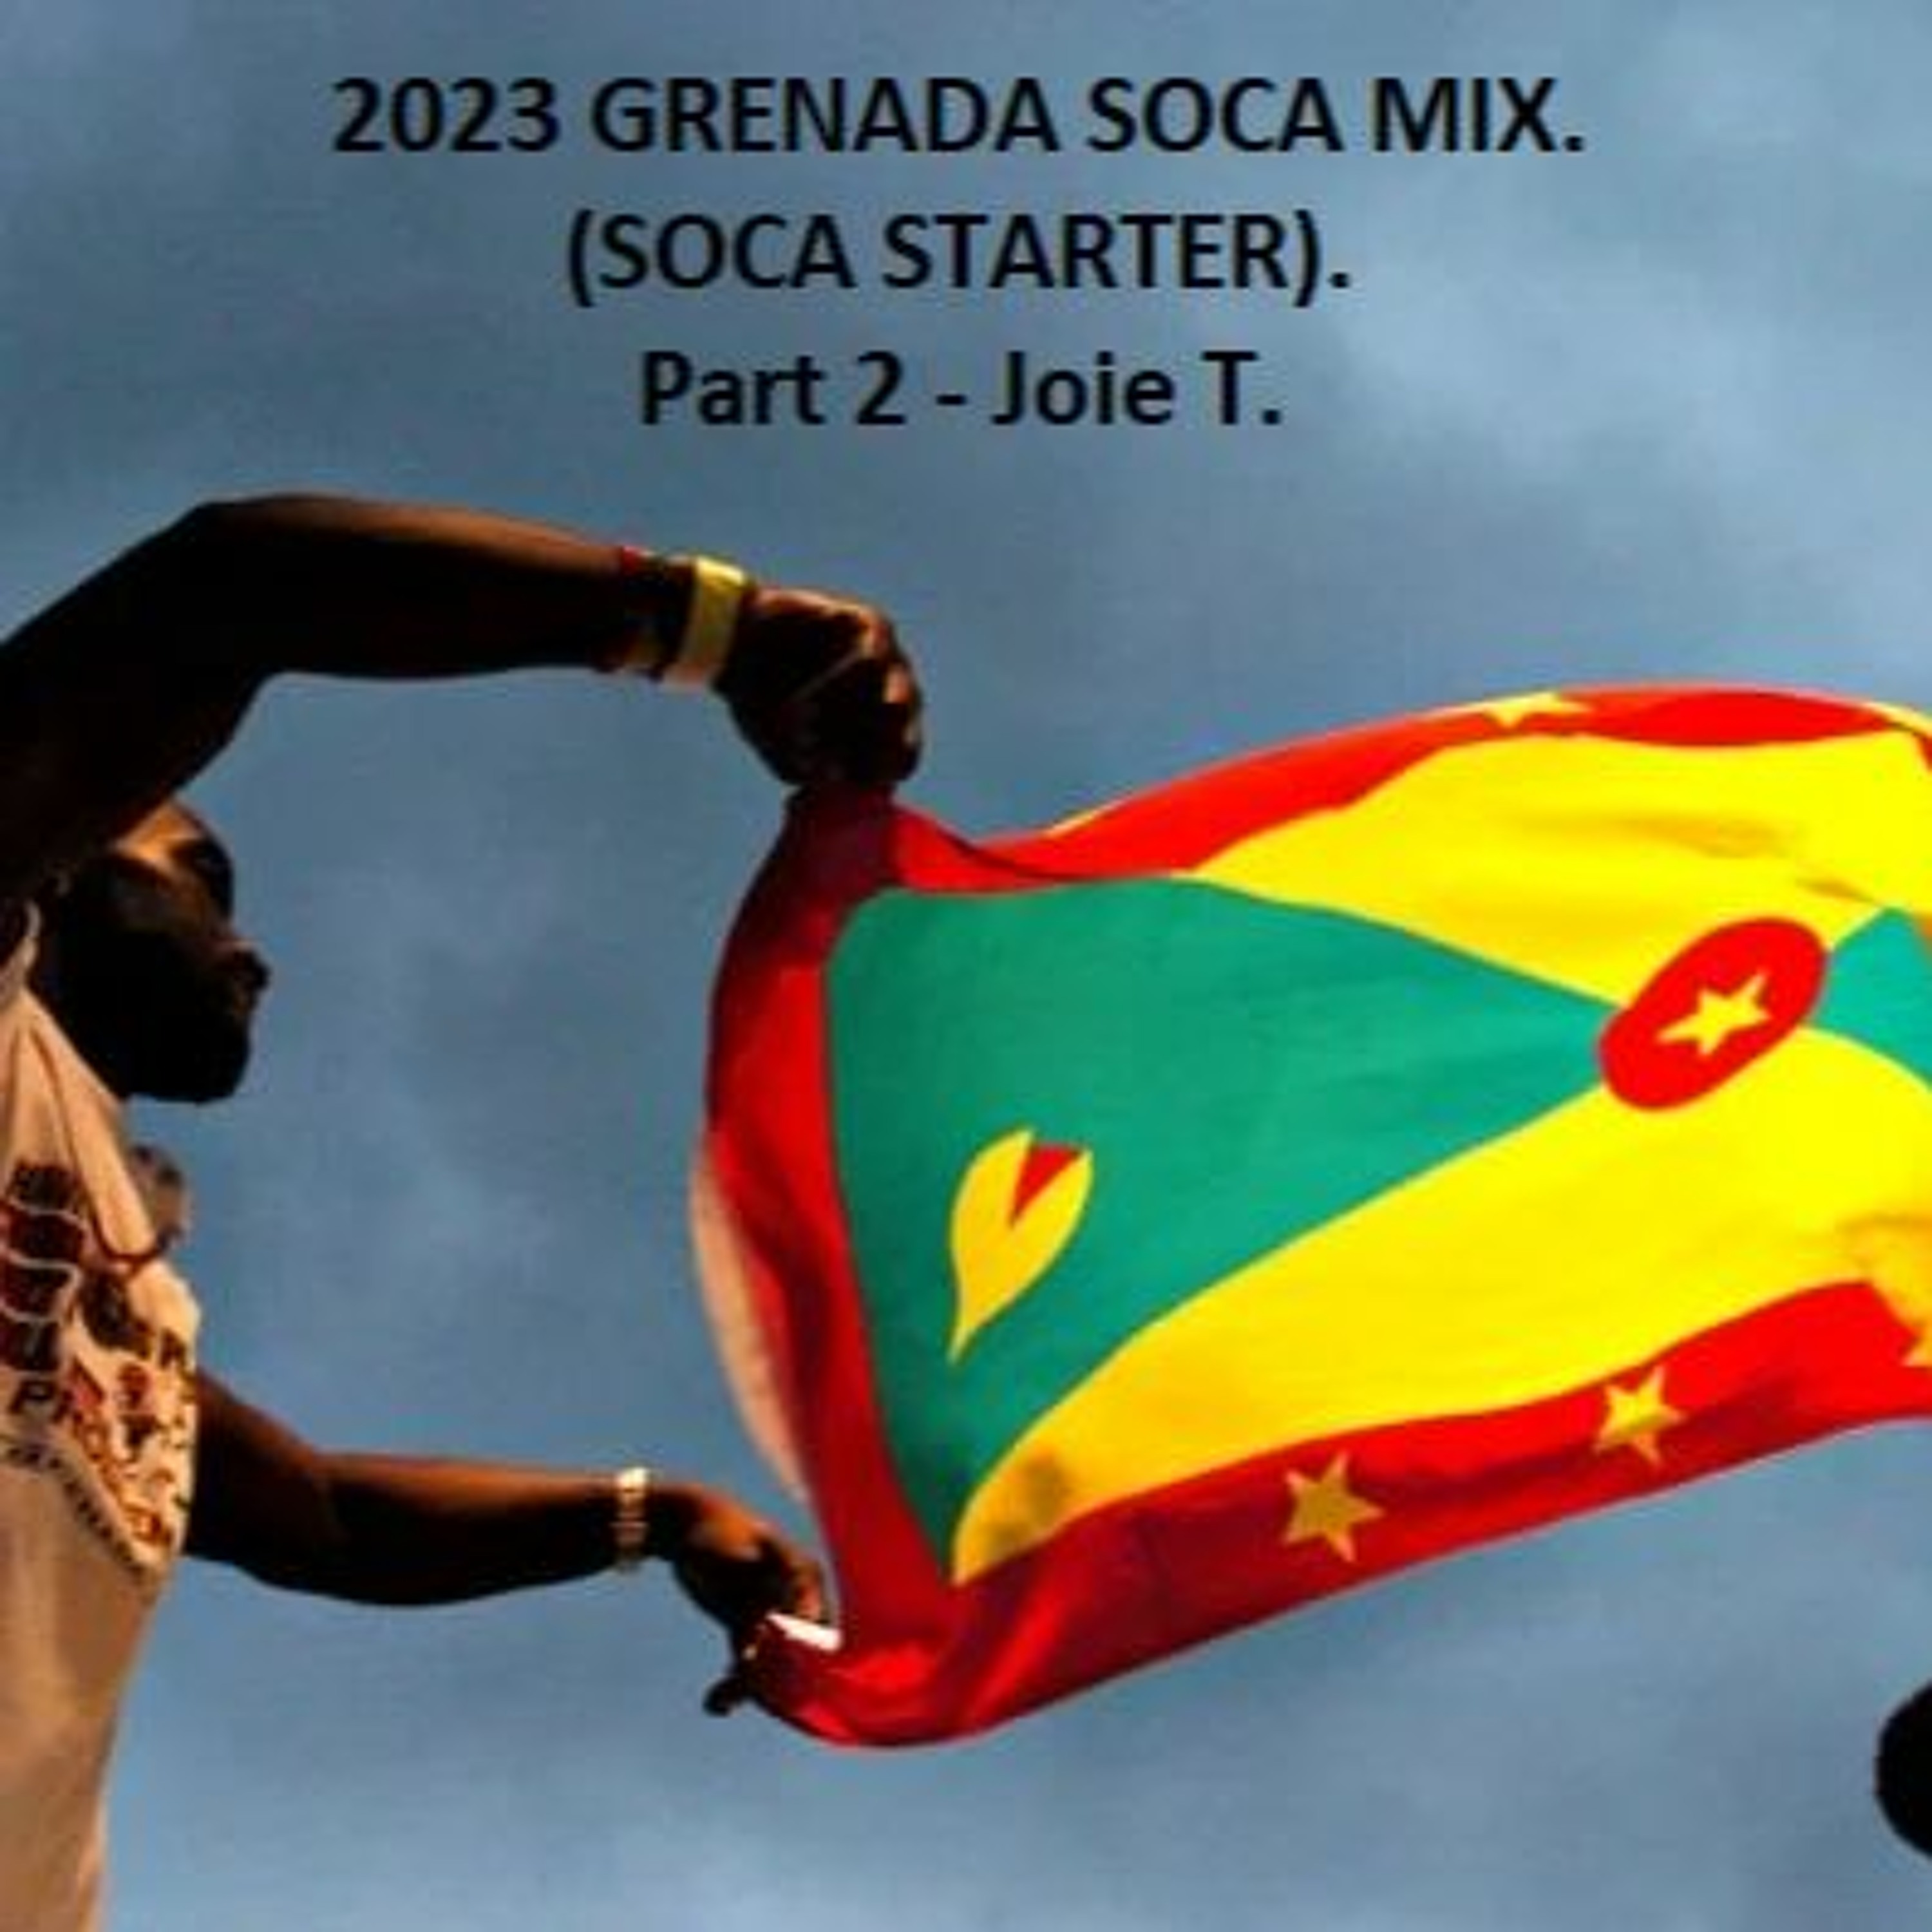 2023 GRENADA SOCA MIX - (SOCA STARTER) - Part 2 - Joie T